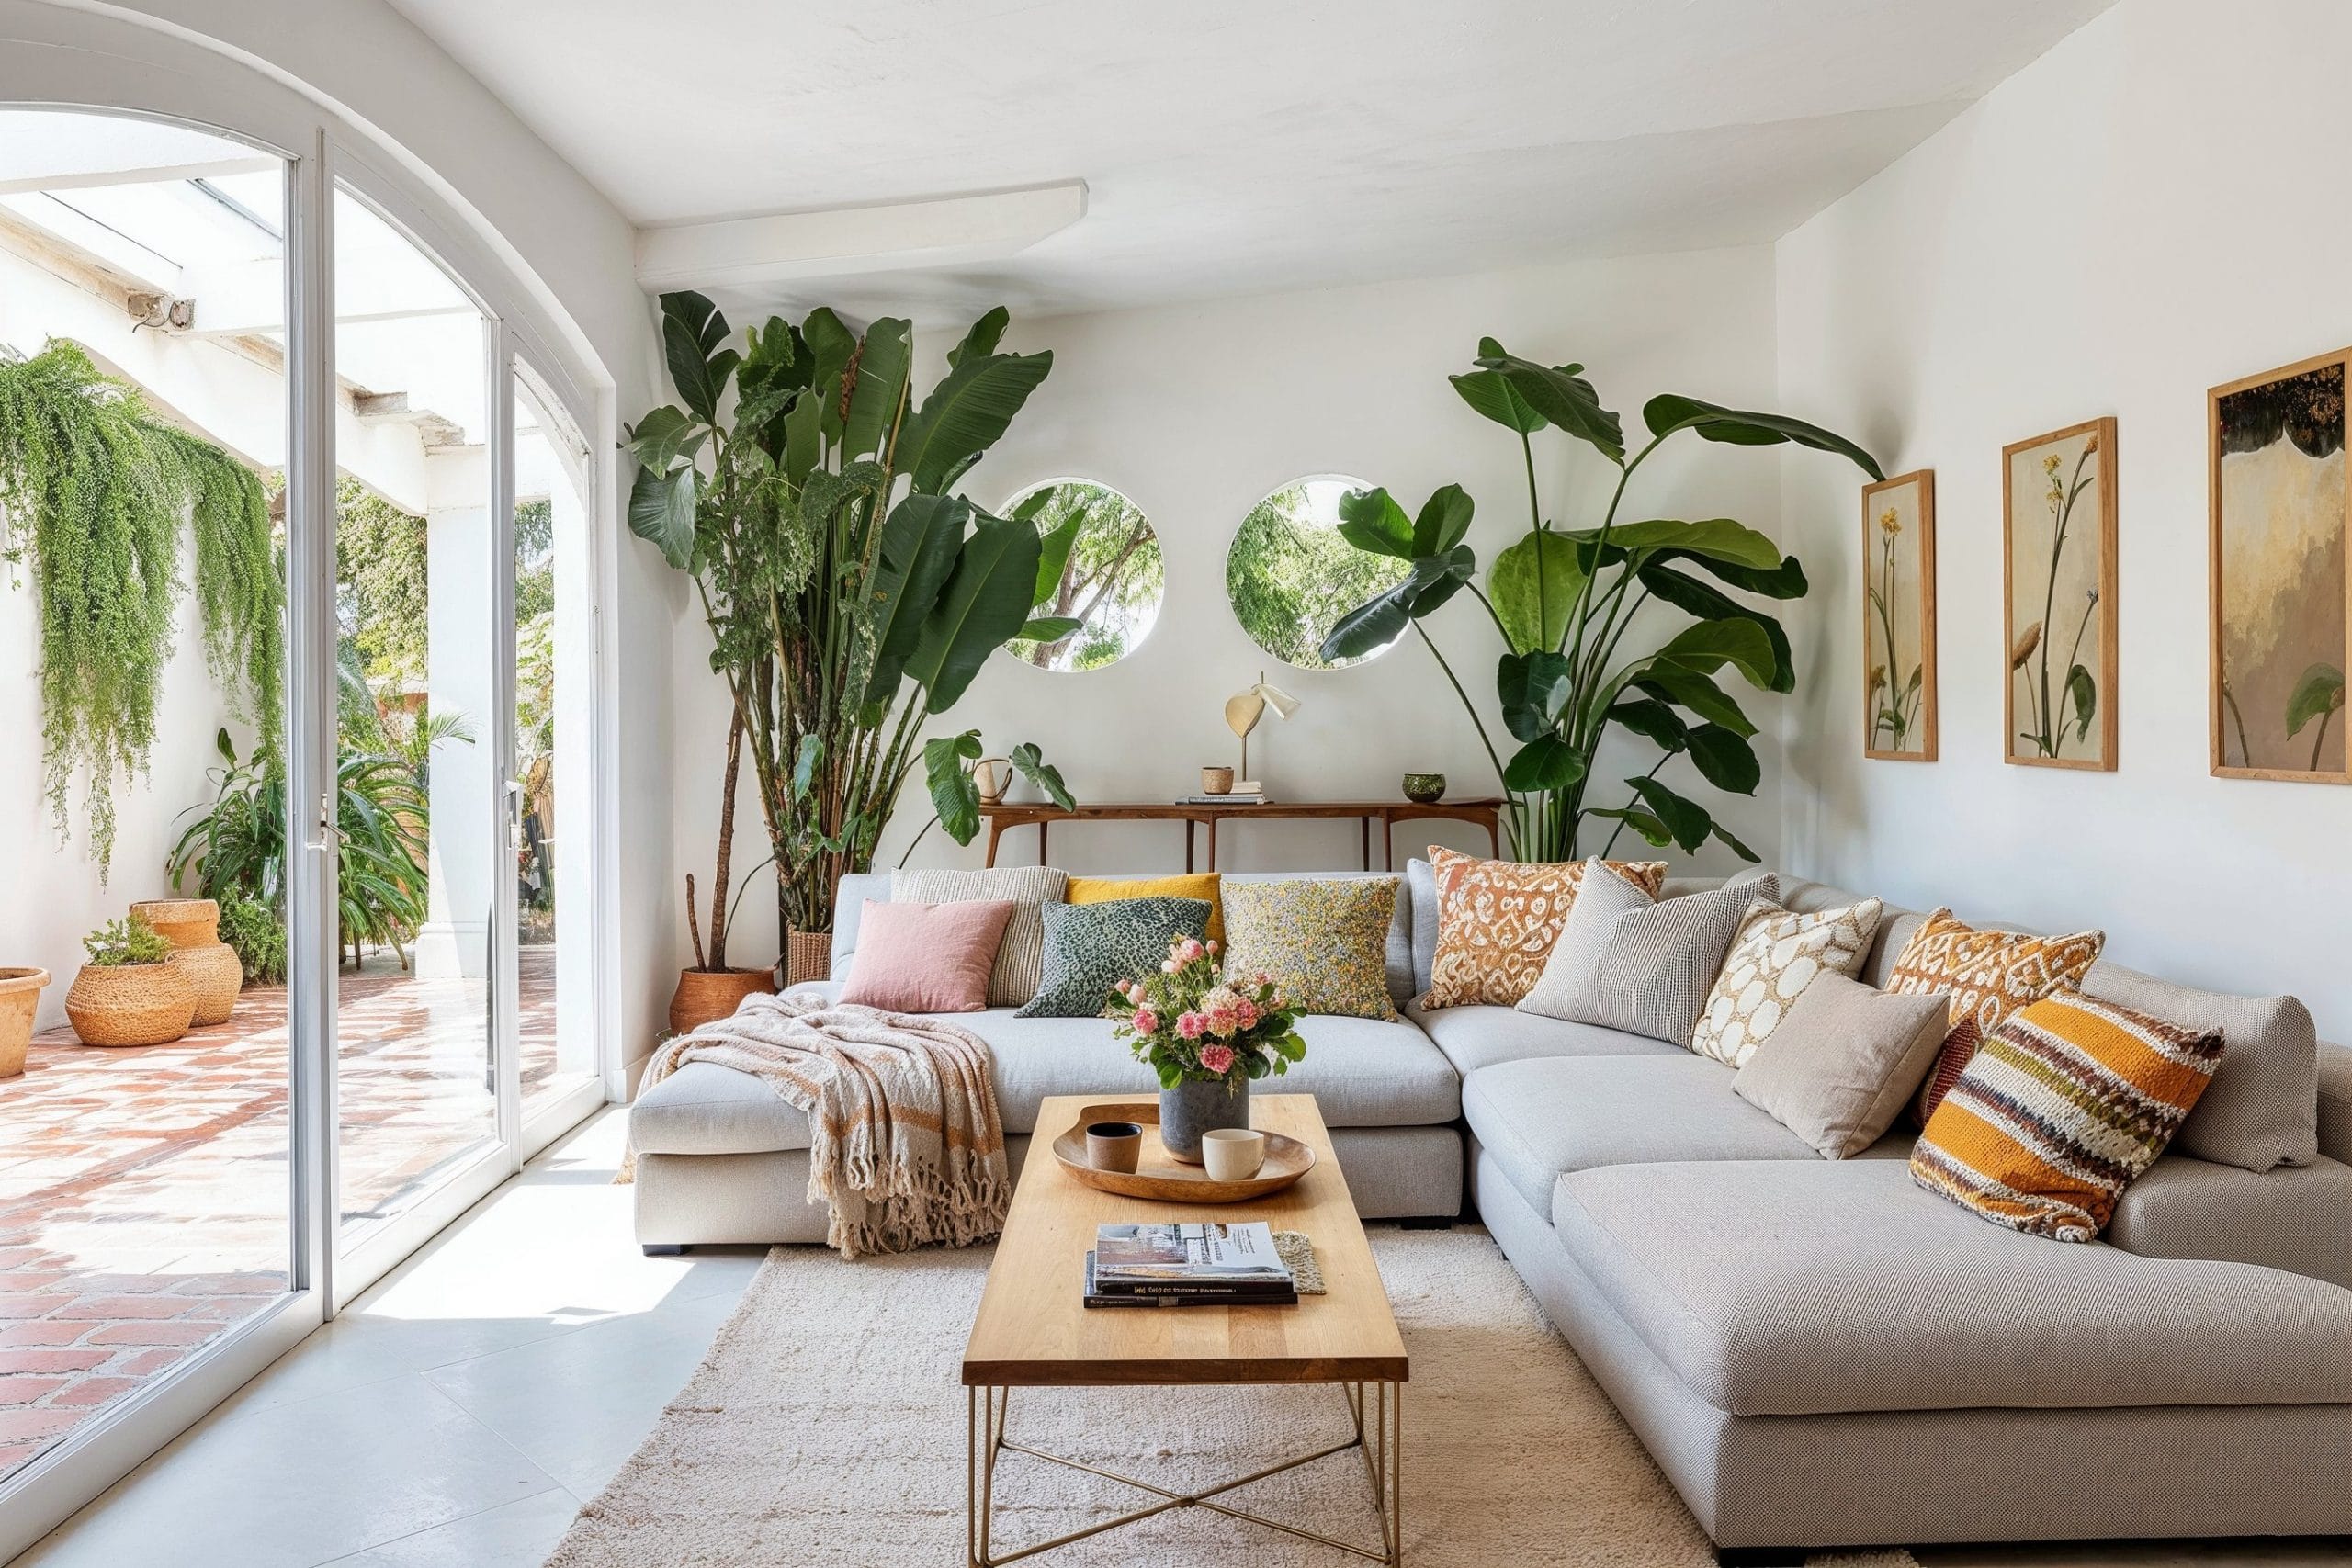 Make This Floral Arrangement in 3 Easy Steps! - Sanctuary Home Decor